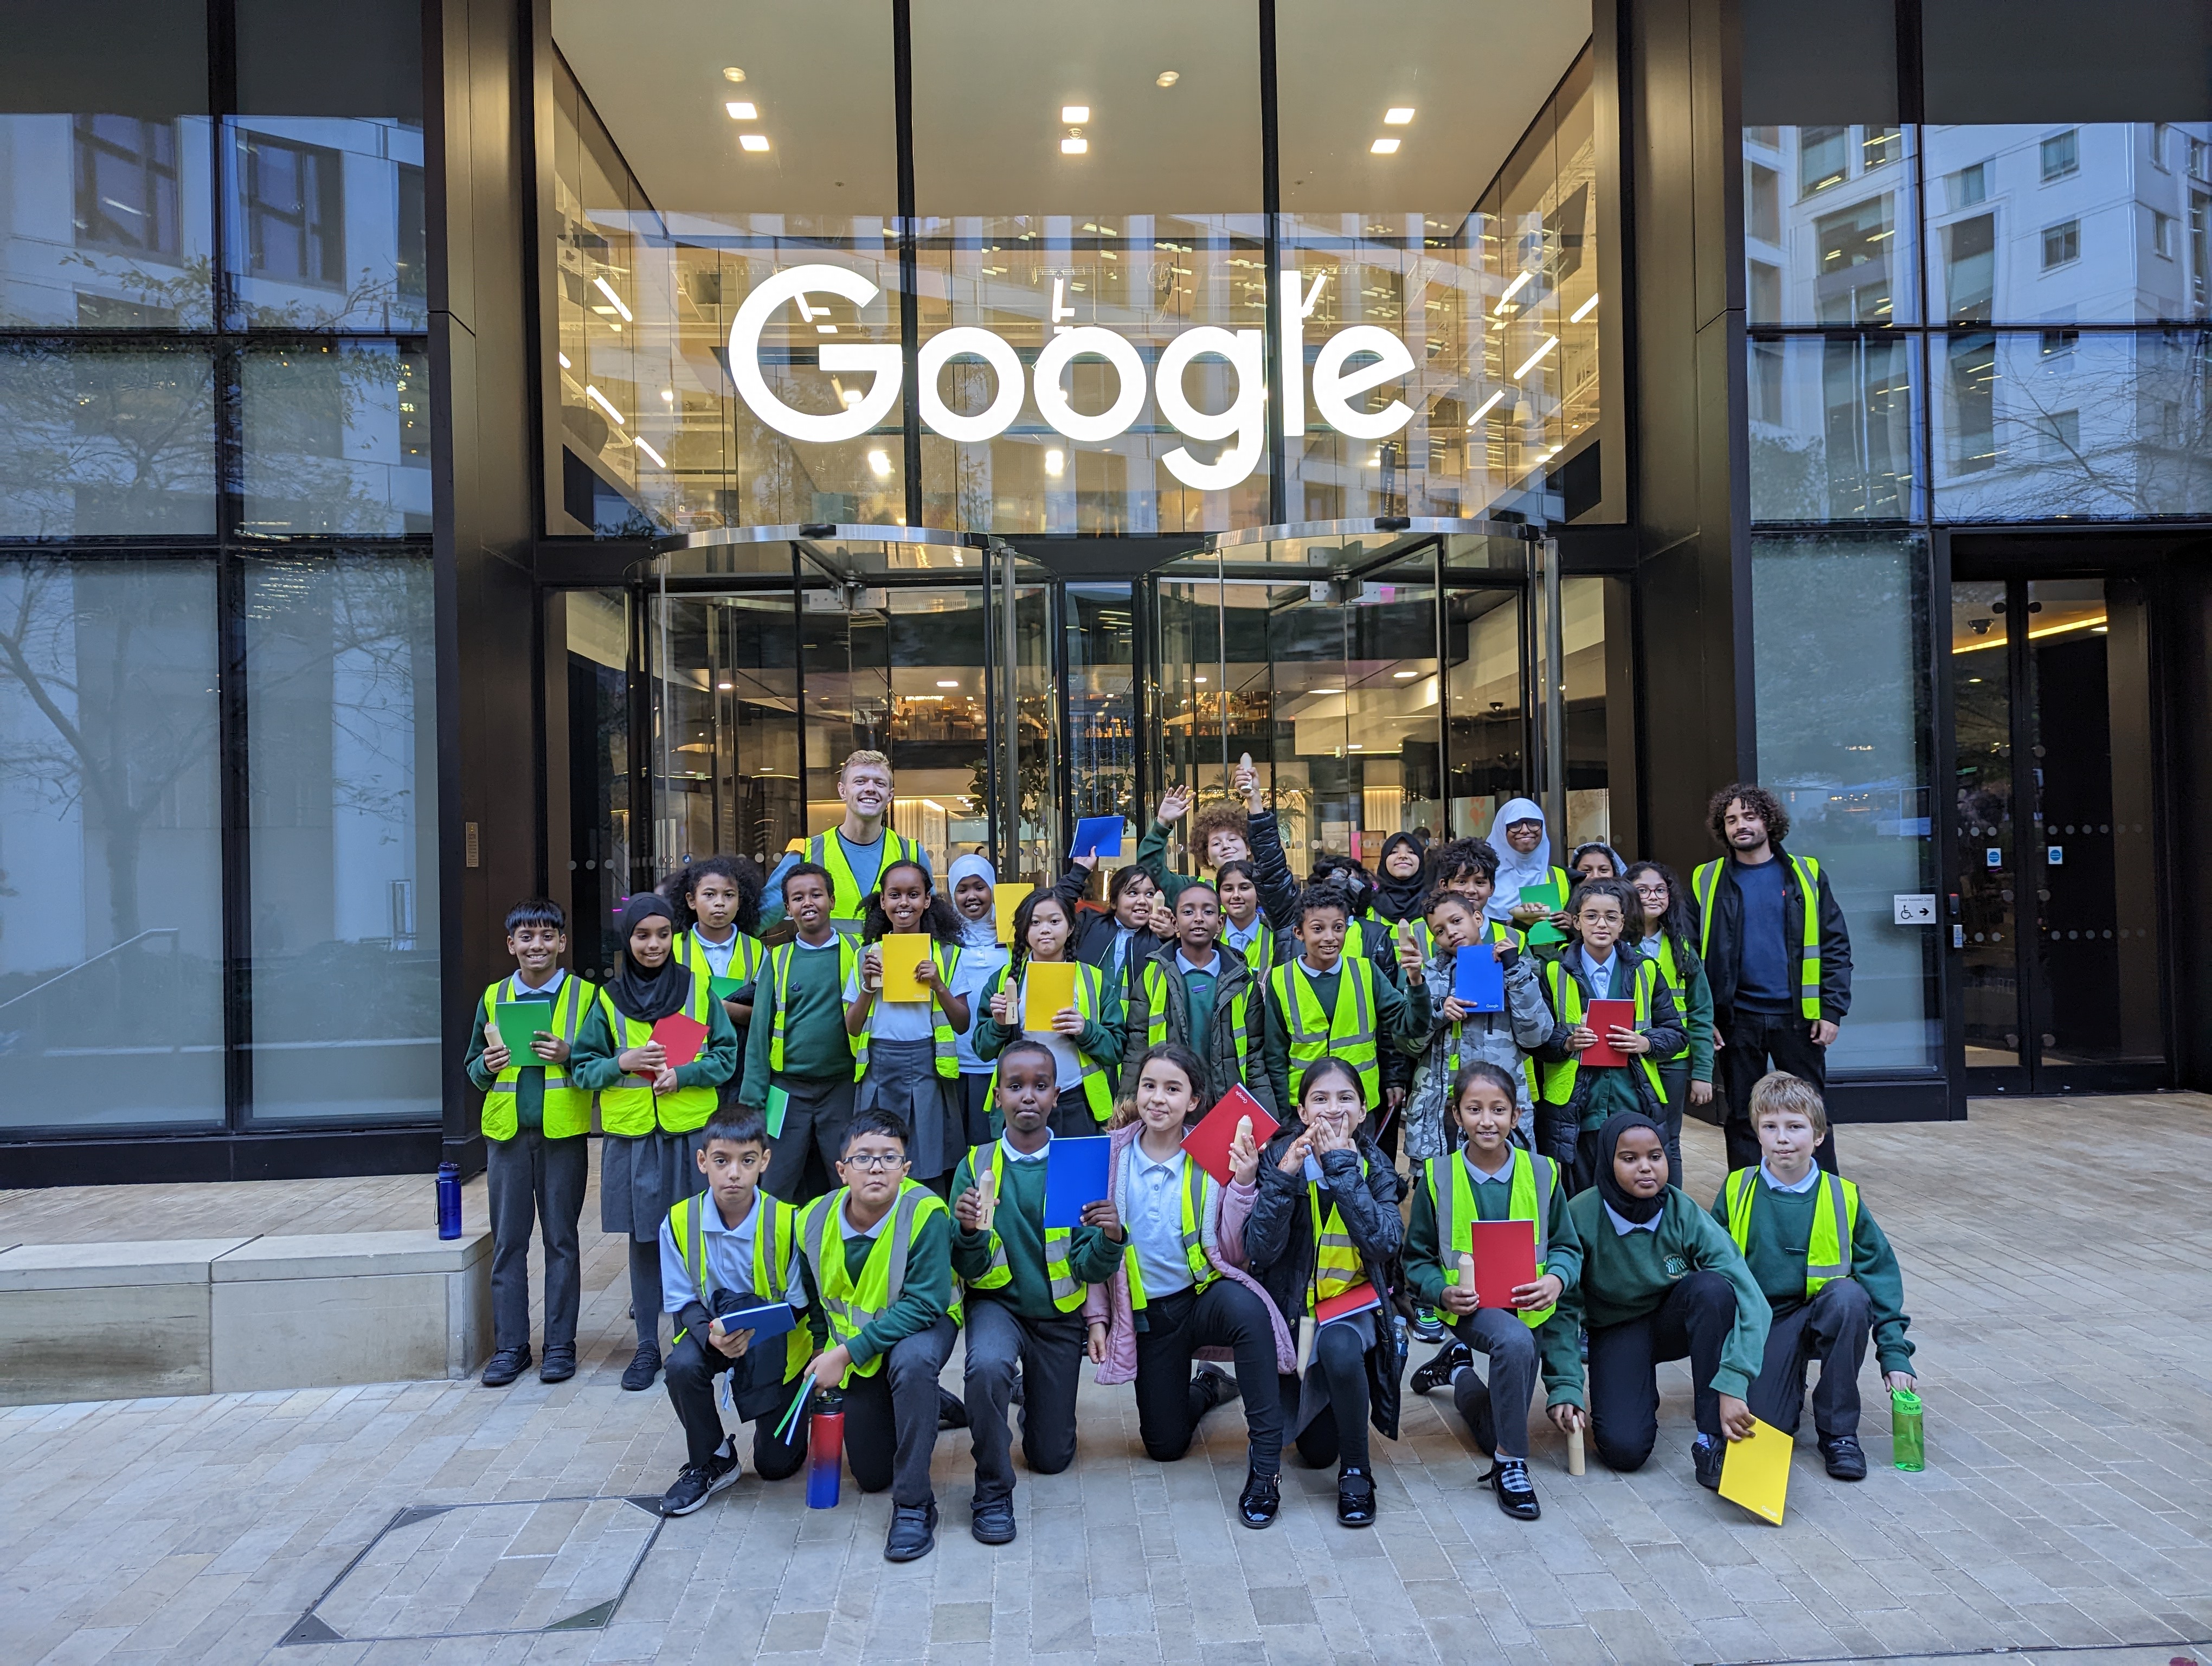 School children outside Google building